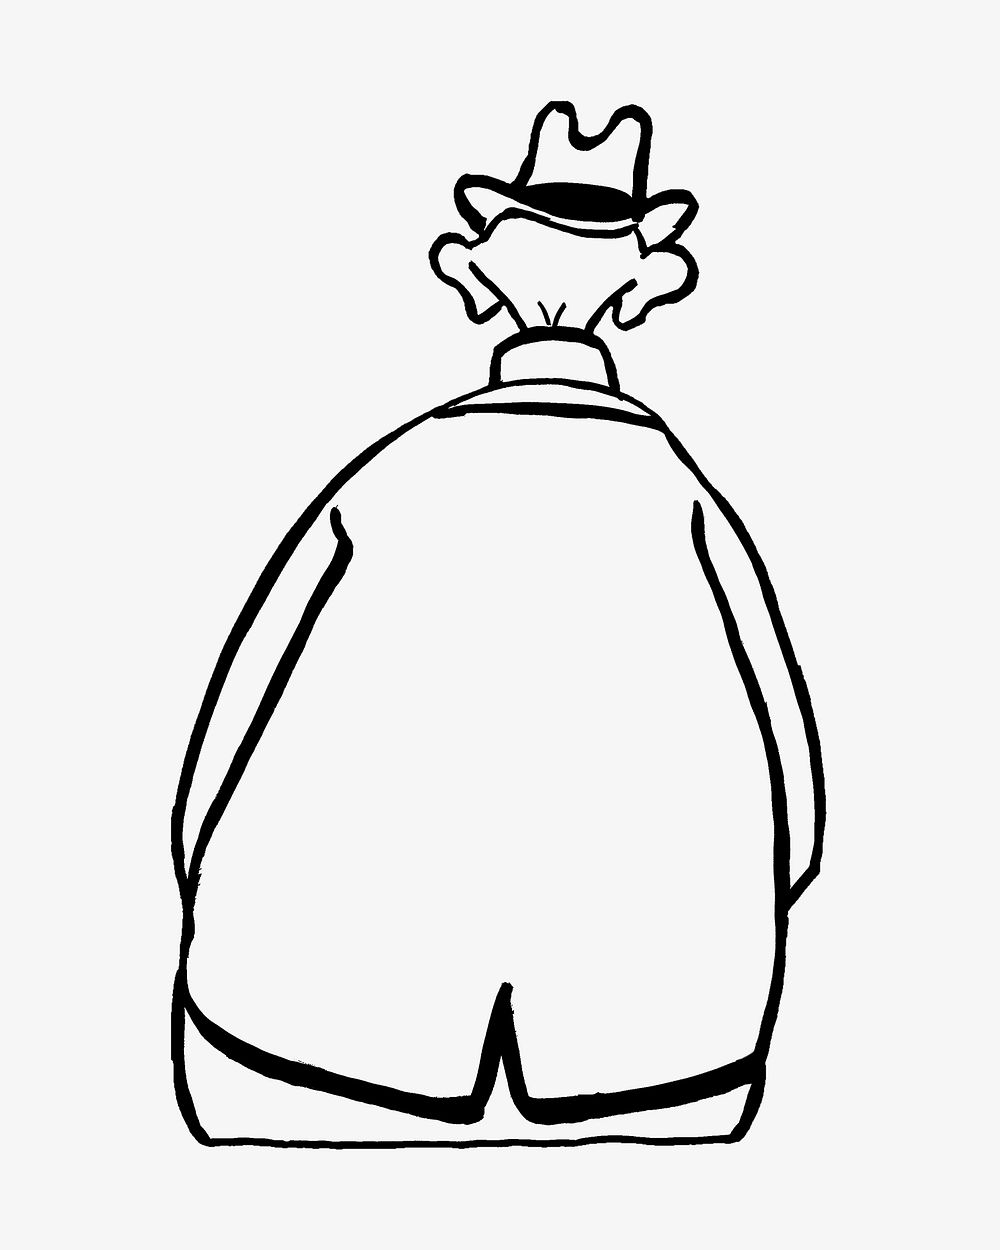 Vintage man cartoon rear view illustration. Remixed by rawpixel. 